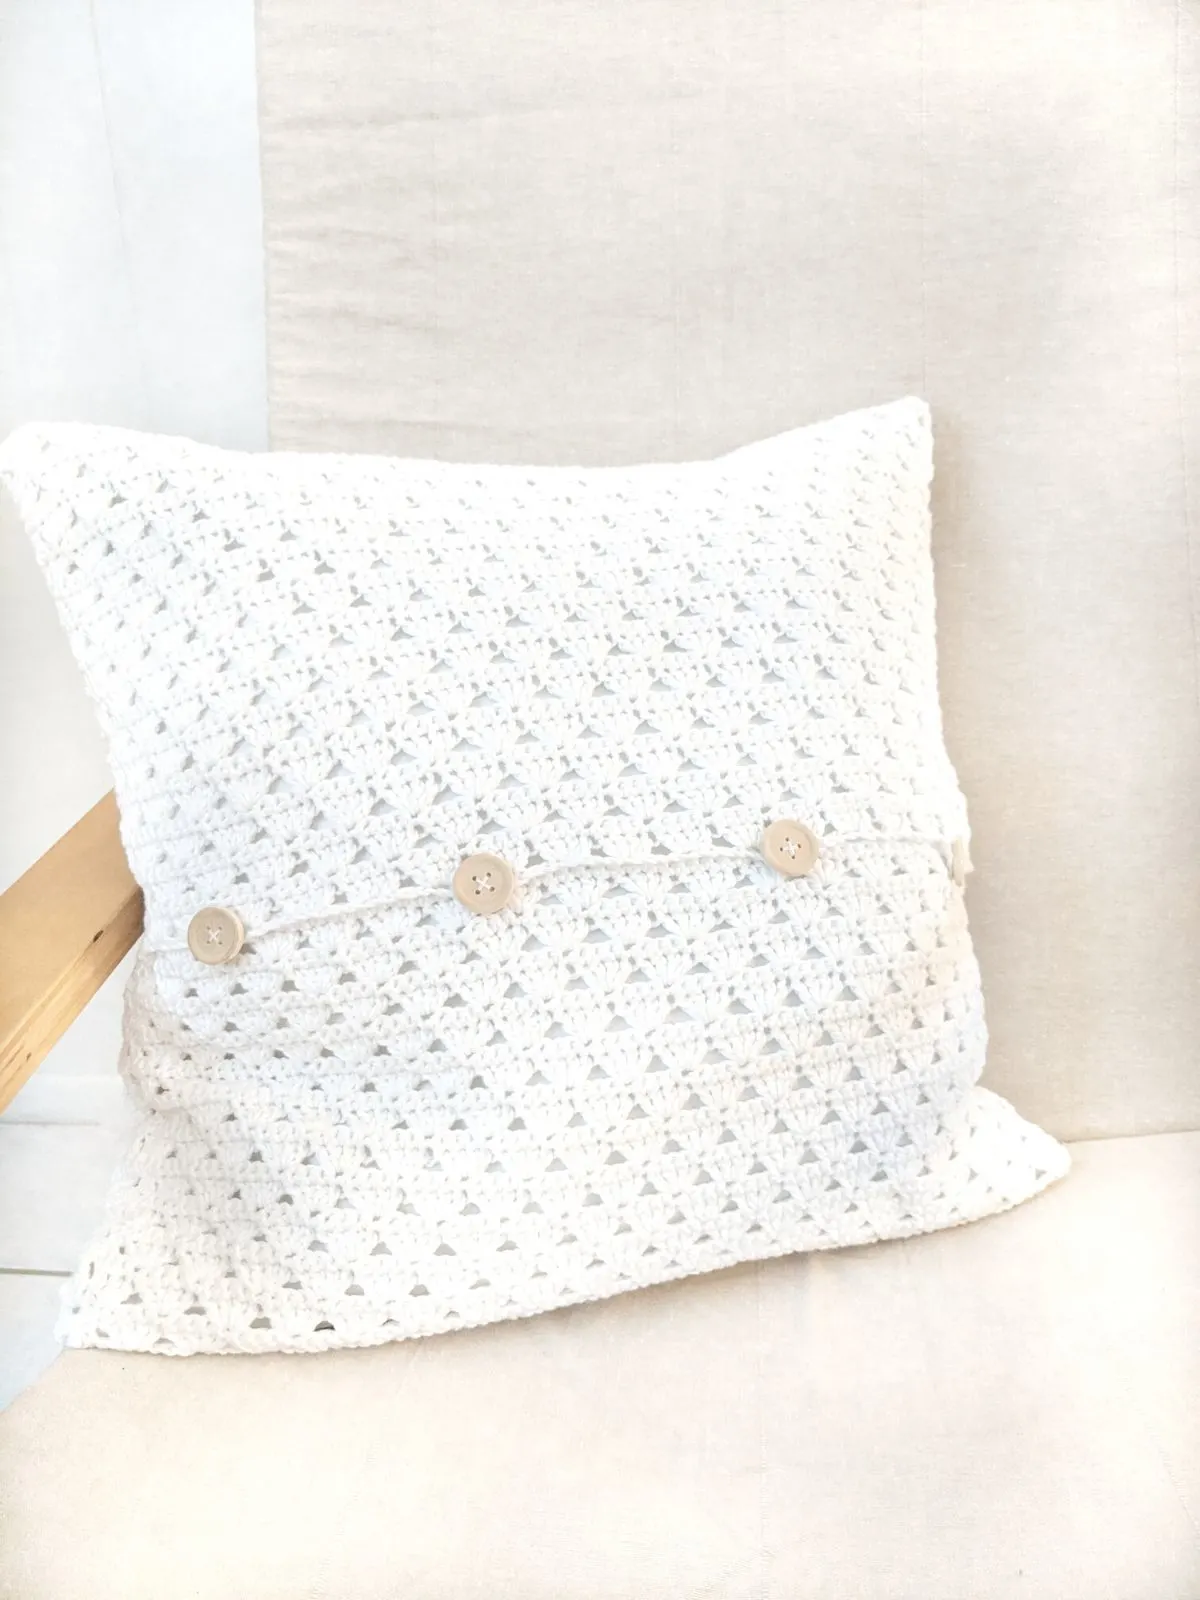 a free textured crochet pillow cover pattern on an Ikea chair.